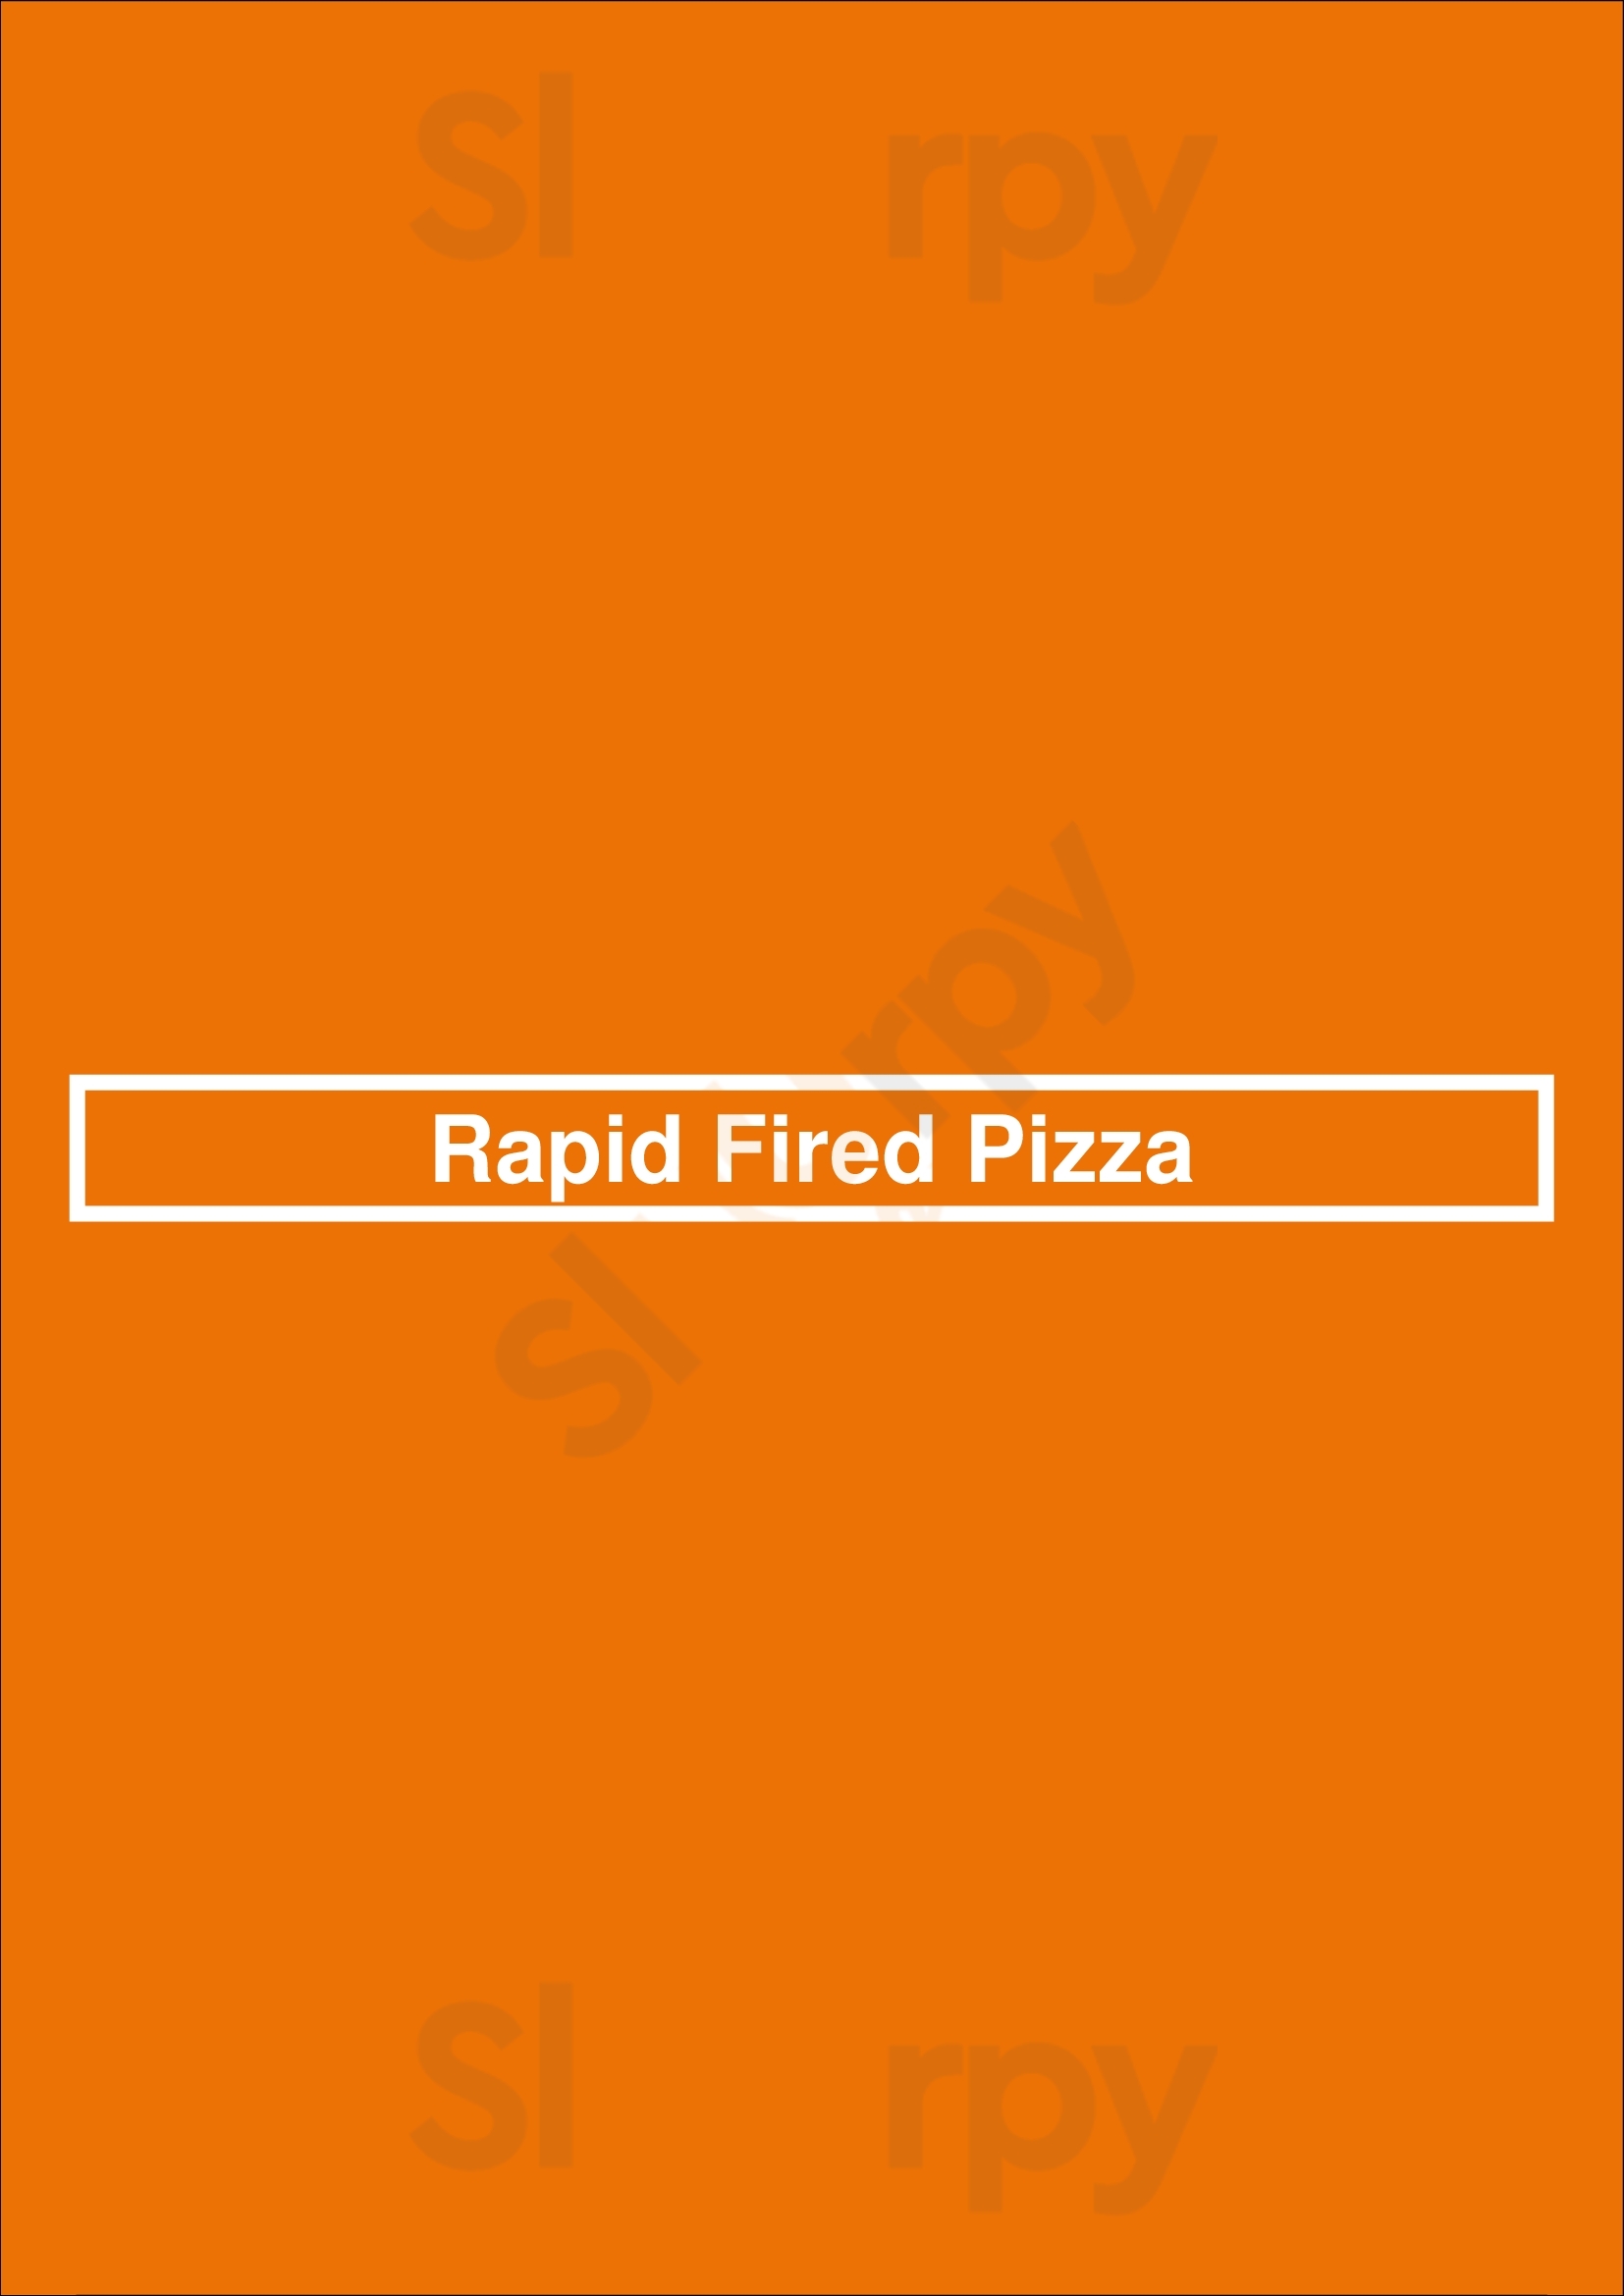 Rapid Fired Pizza Cincinnati Menu - 1